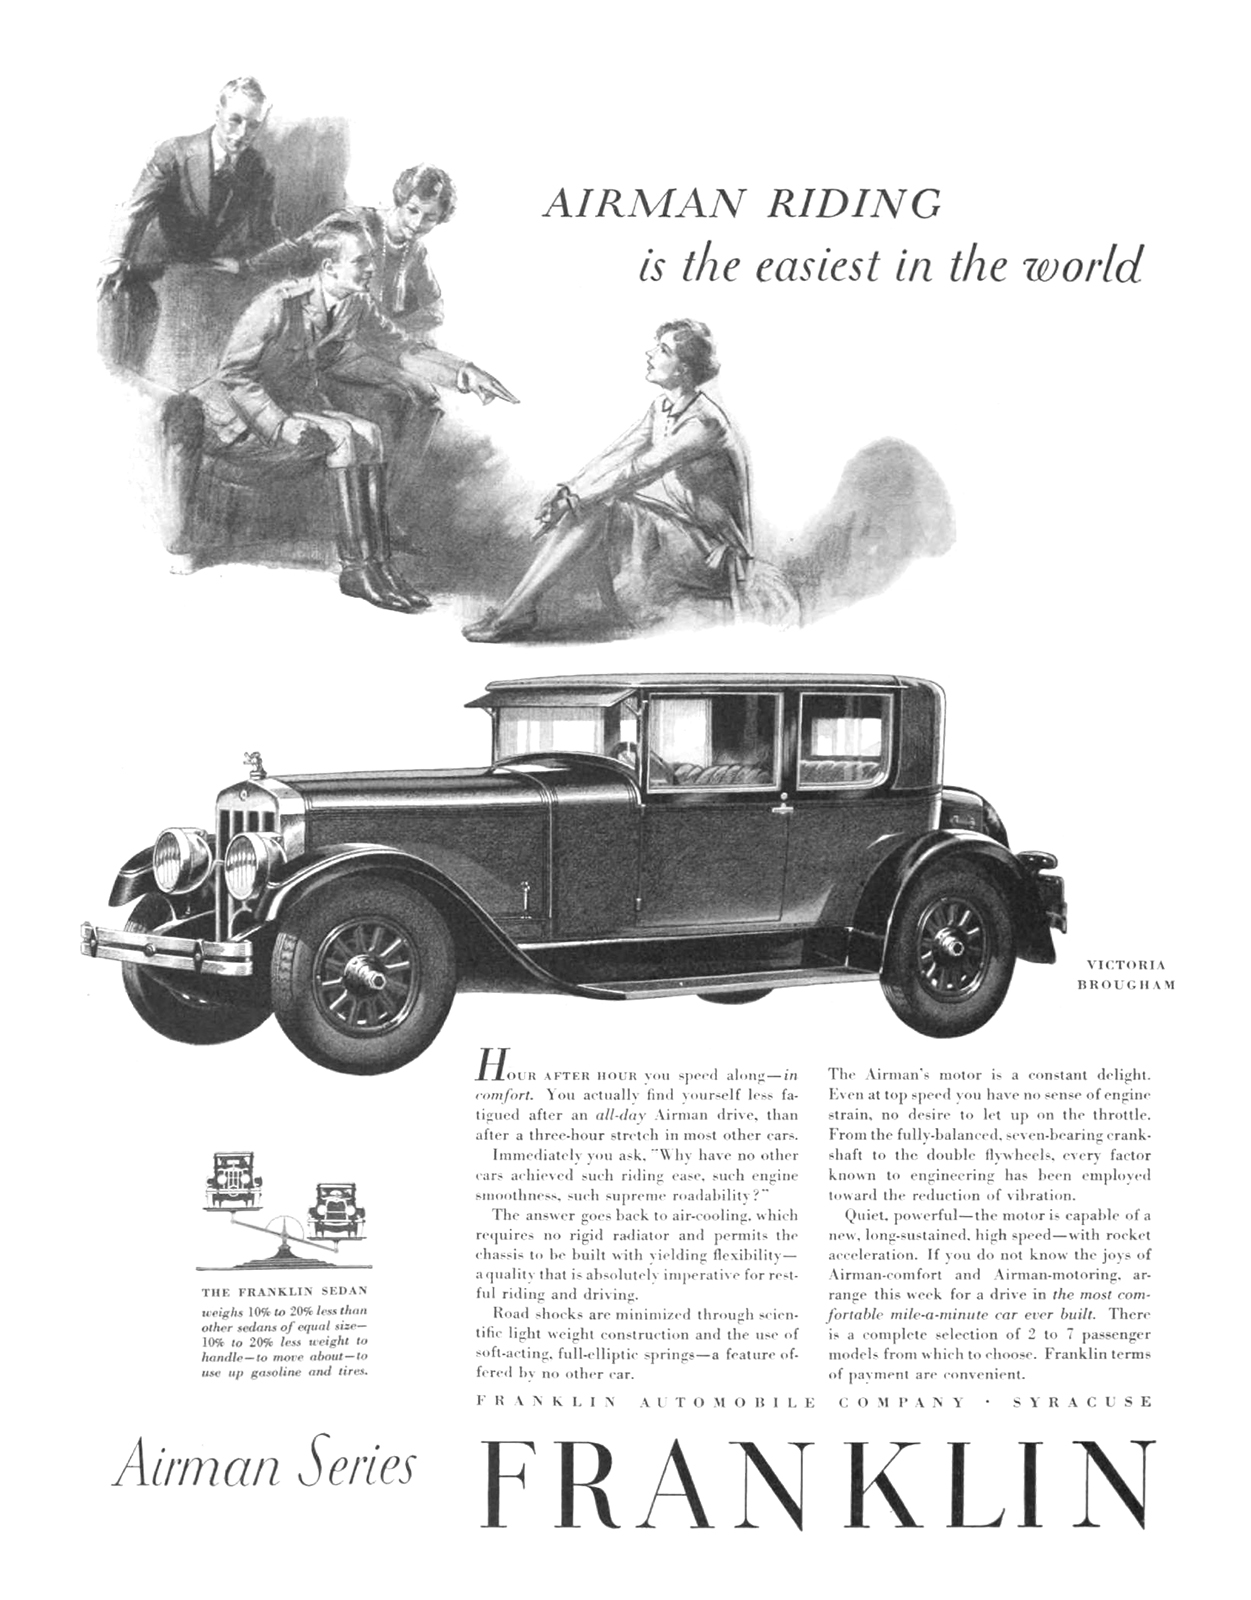 Franklin Airman Series Victoria Brougham Ad (April, 1928)